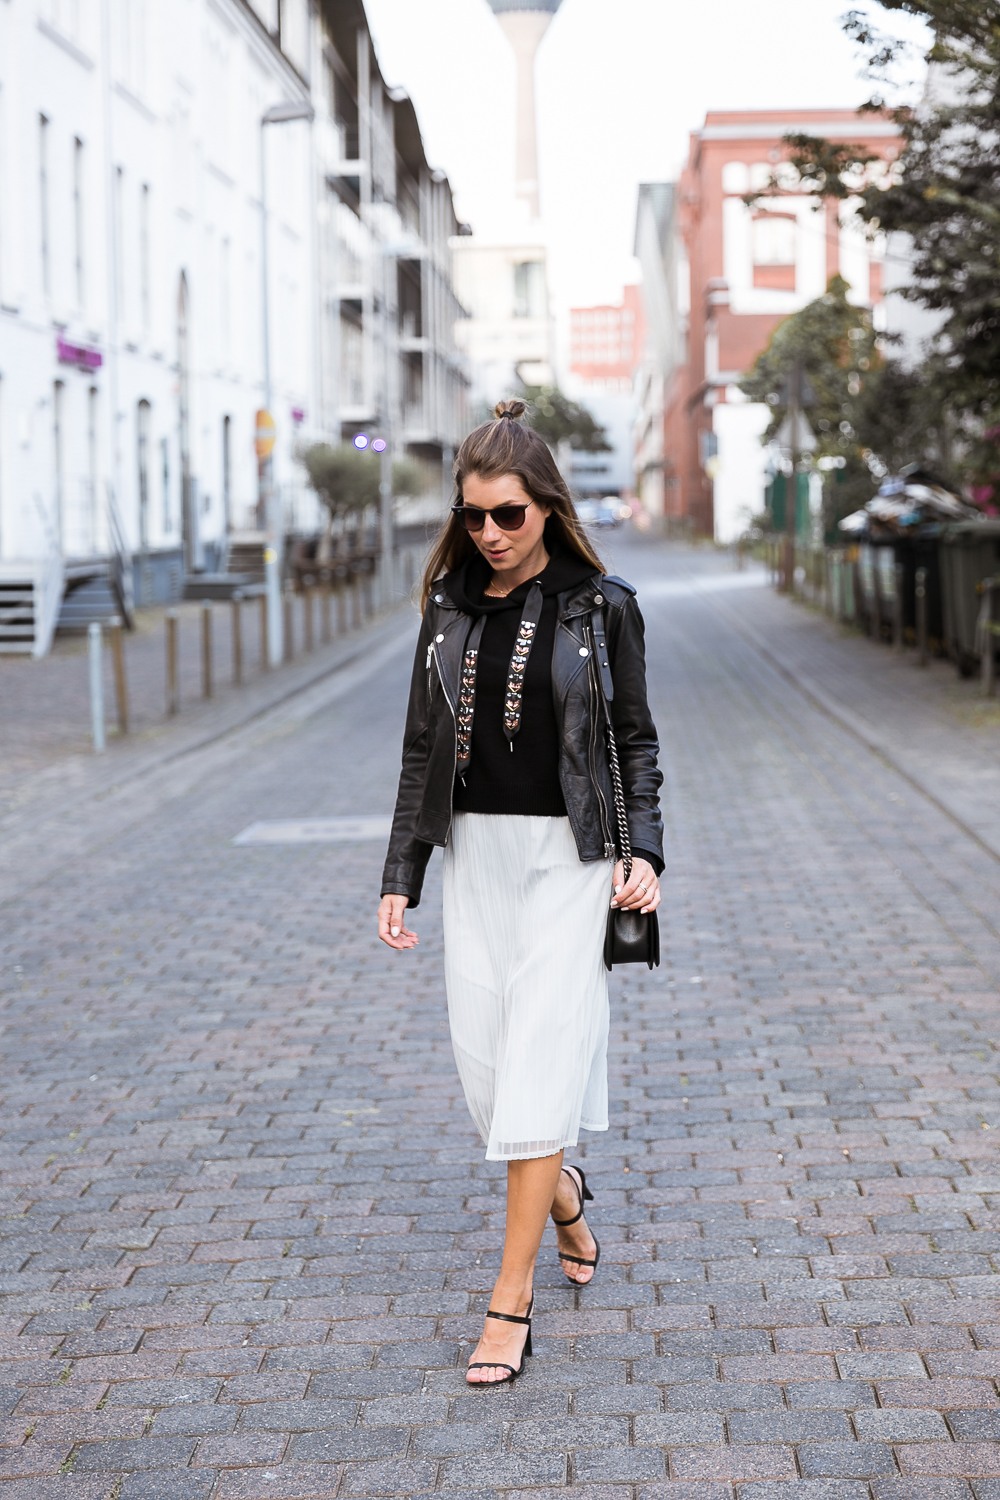 plissee midi skirt outfit hoodie leatherjacket heels chanel bag autumn streetstyle fashionblog